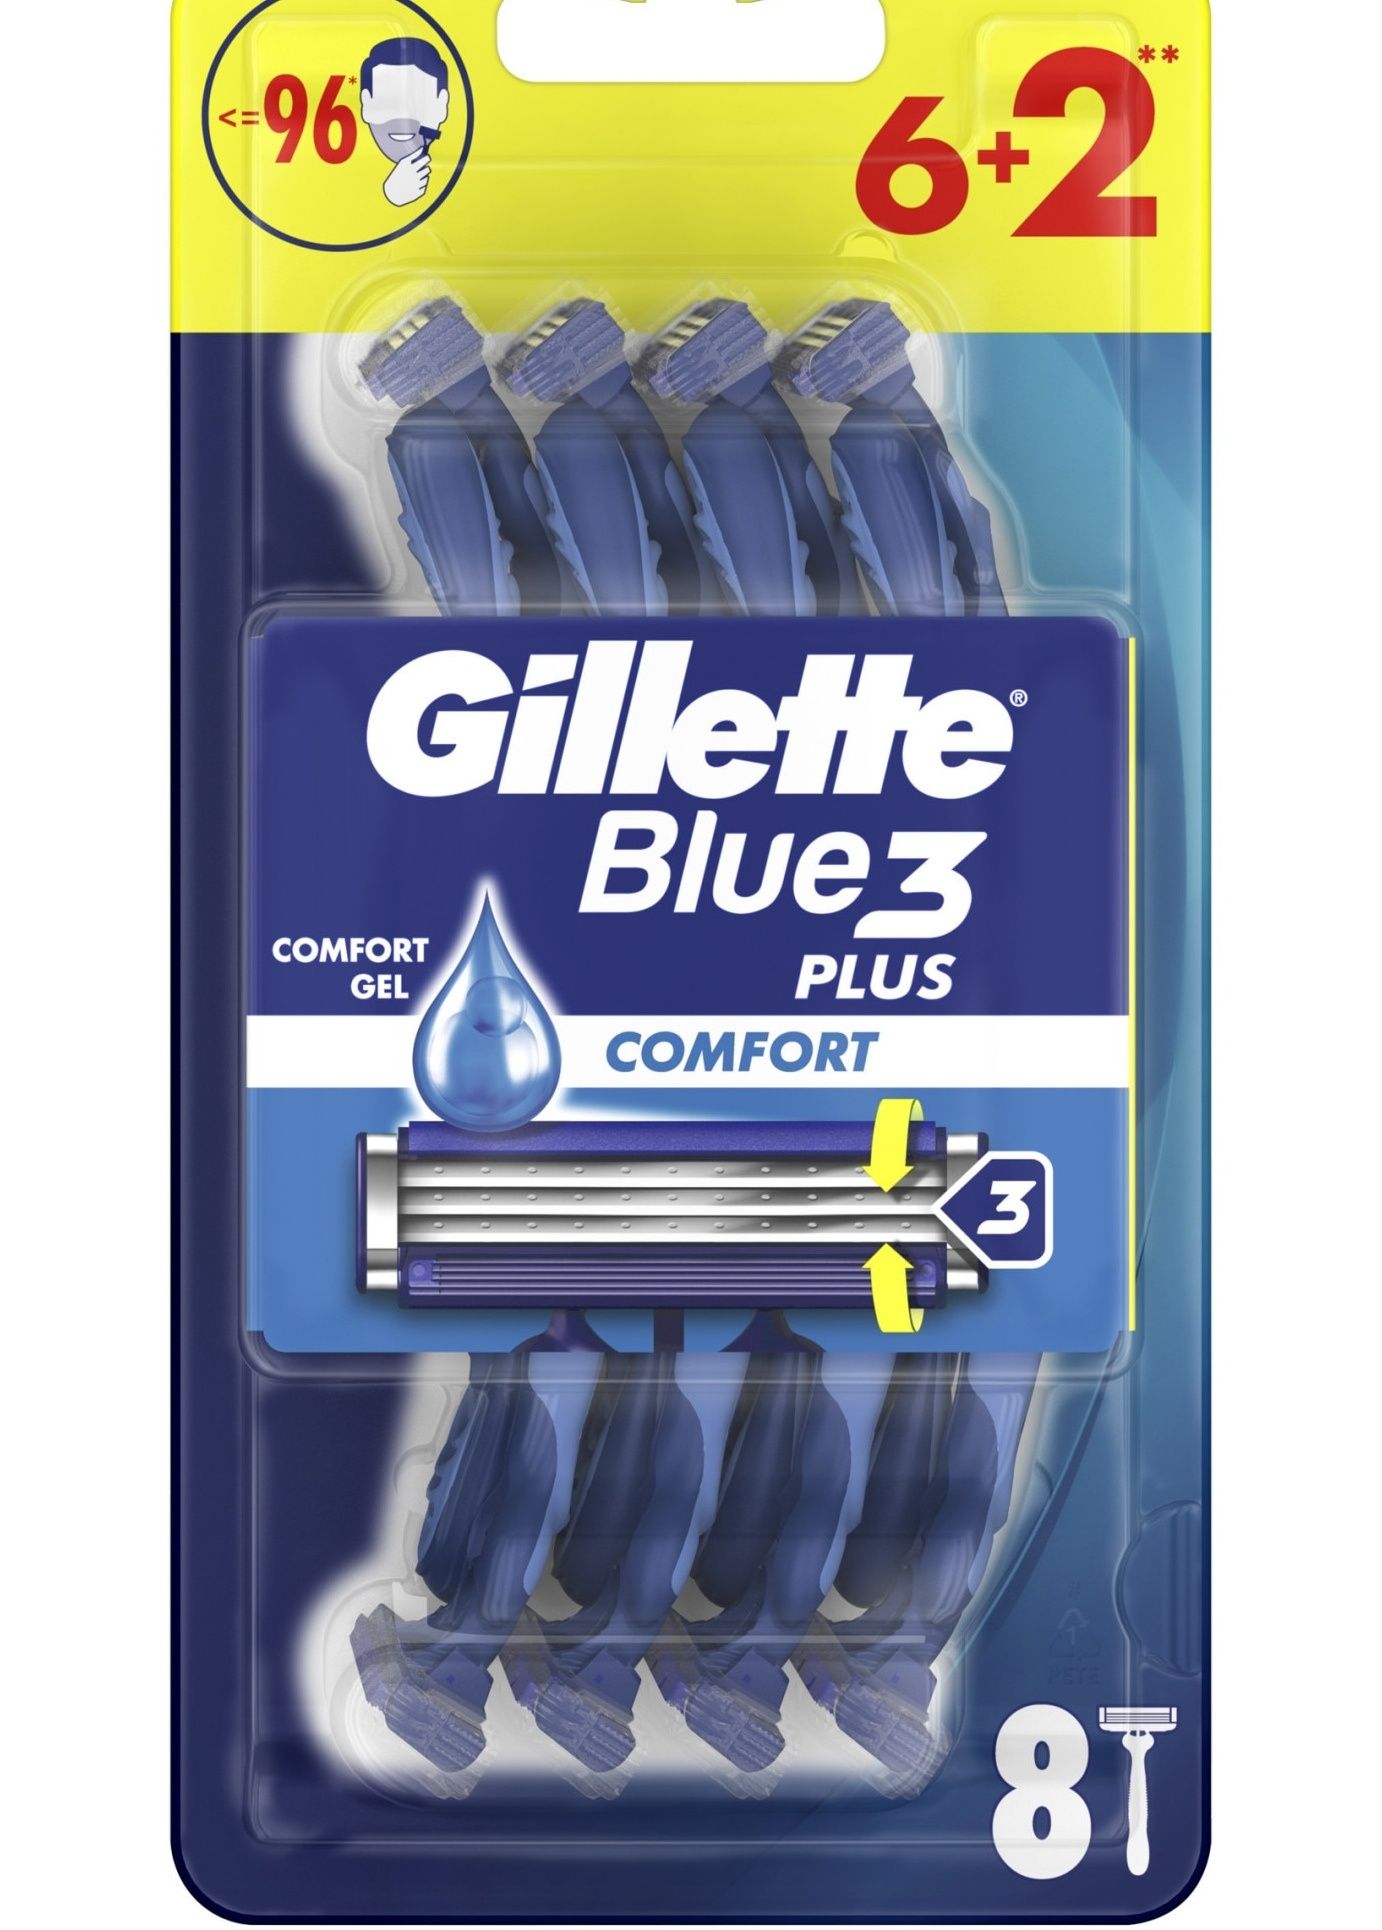 Gillette blue 3 plus Comfort